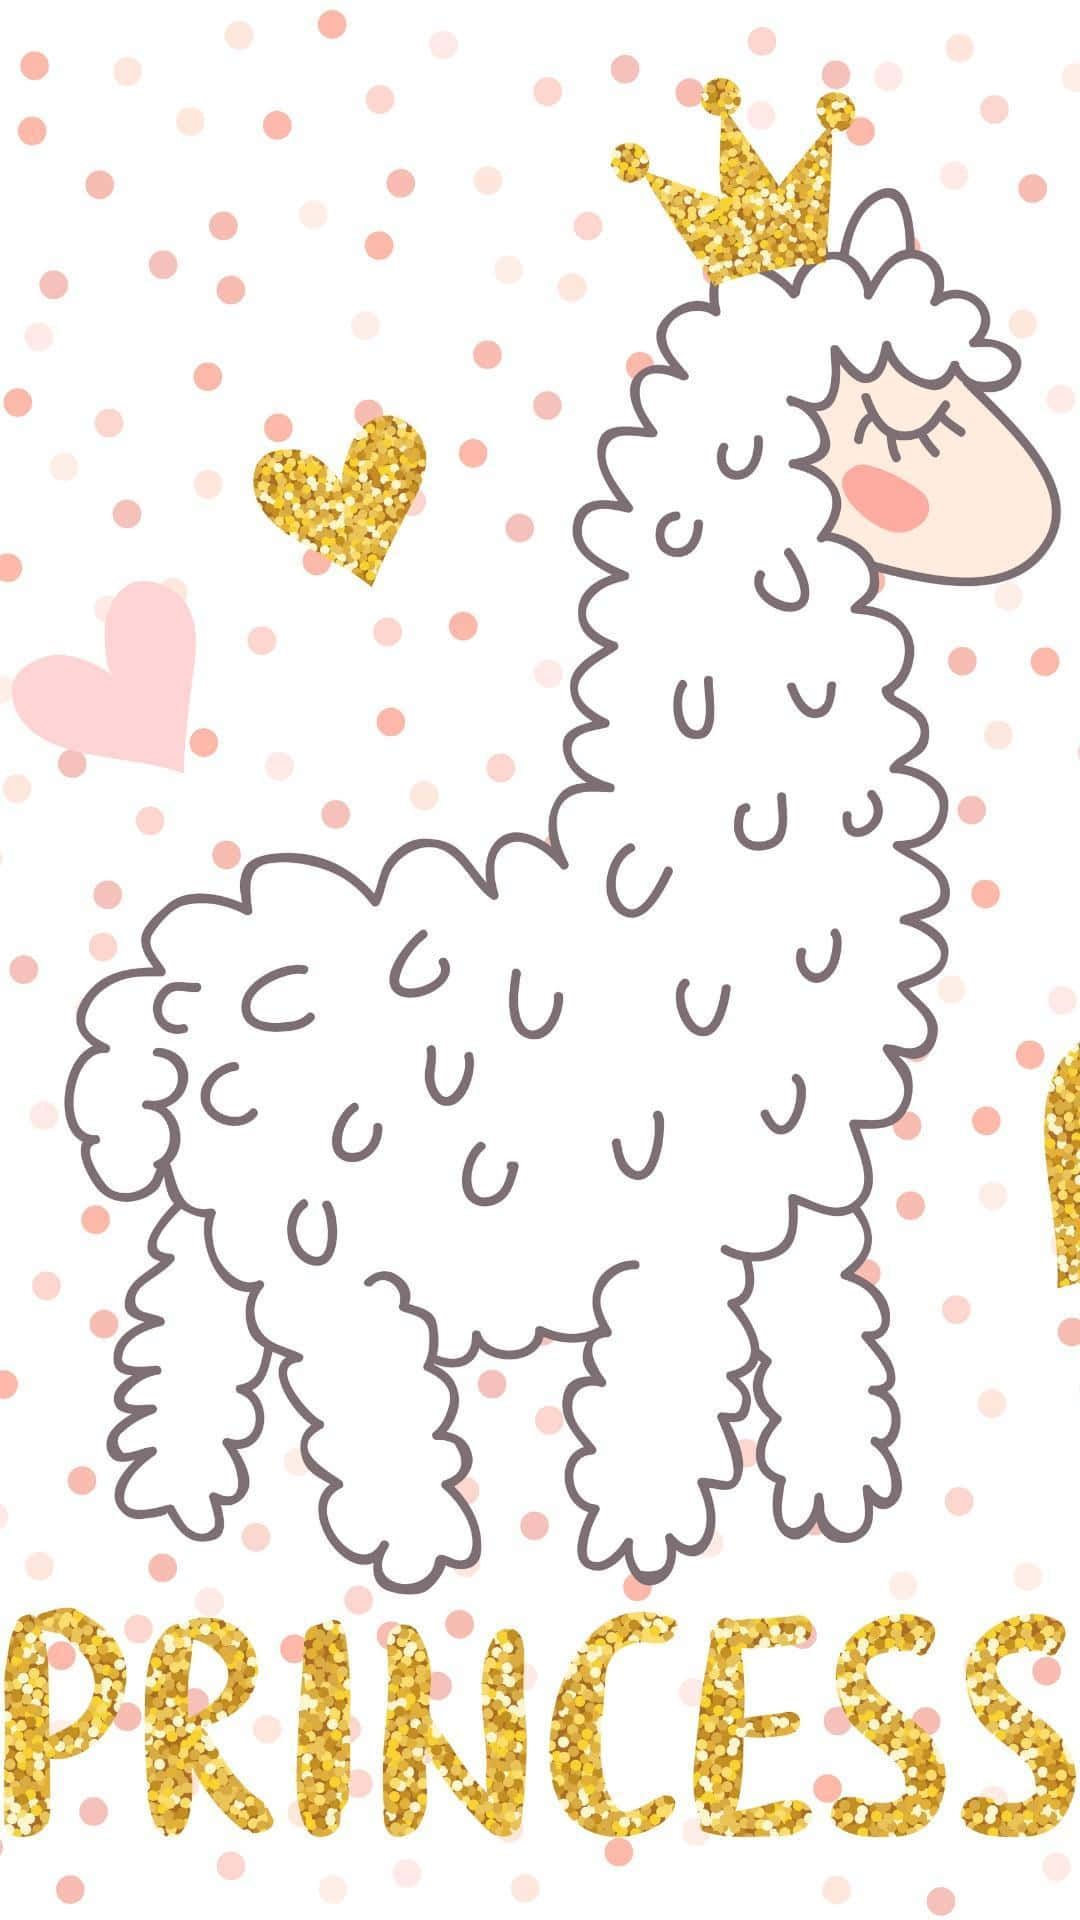 Adorable Kawaii Llama Wallpaper with a Pink Heart Background Wallpaper